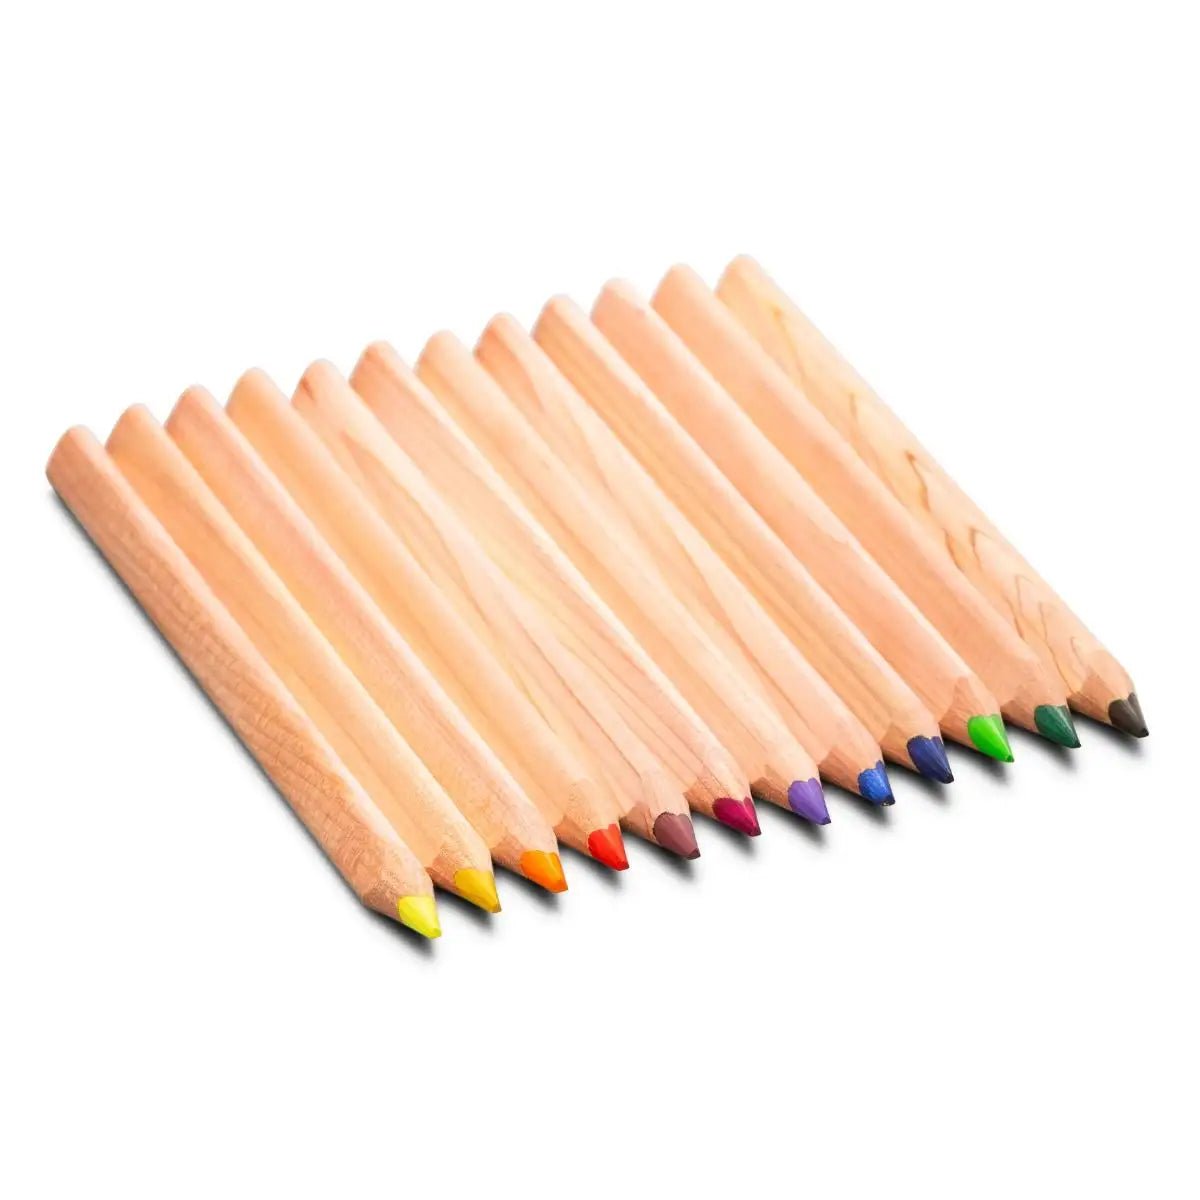 yorik triangular color pencils in wooden box close